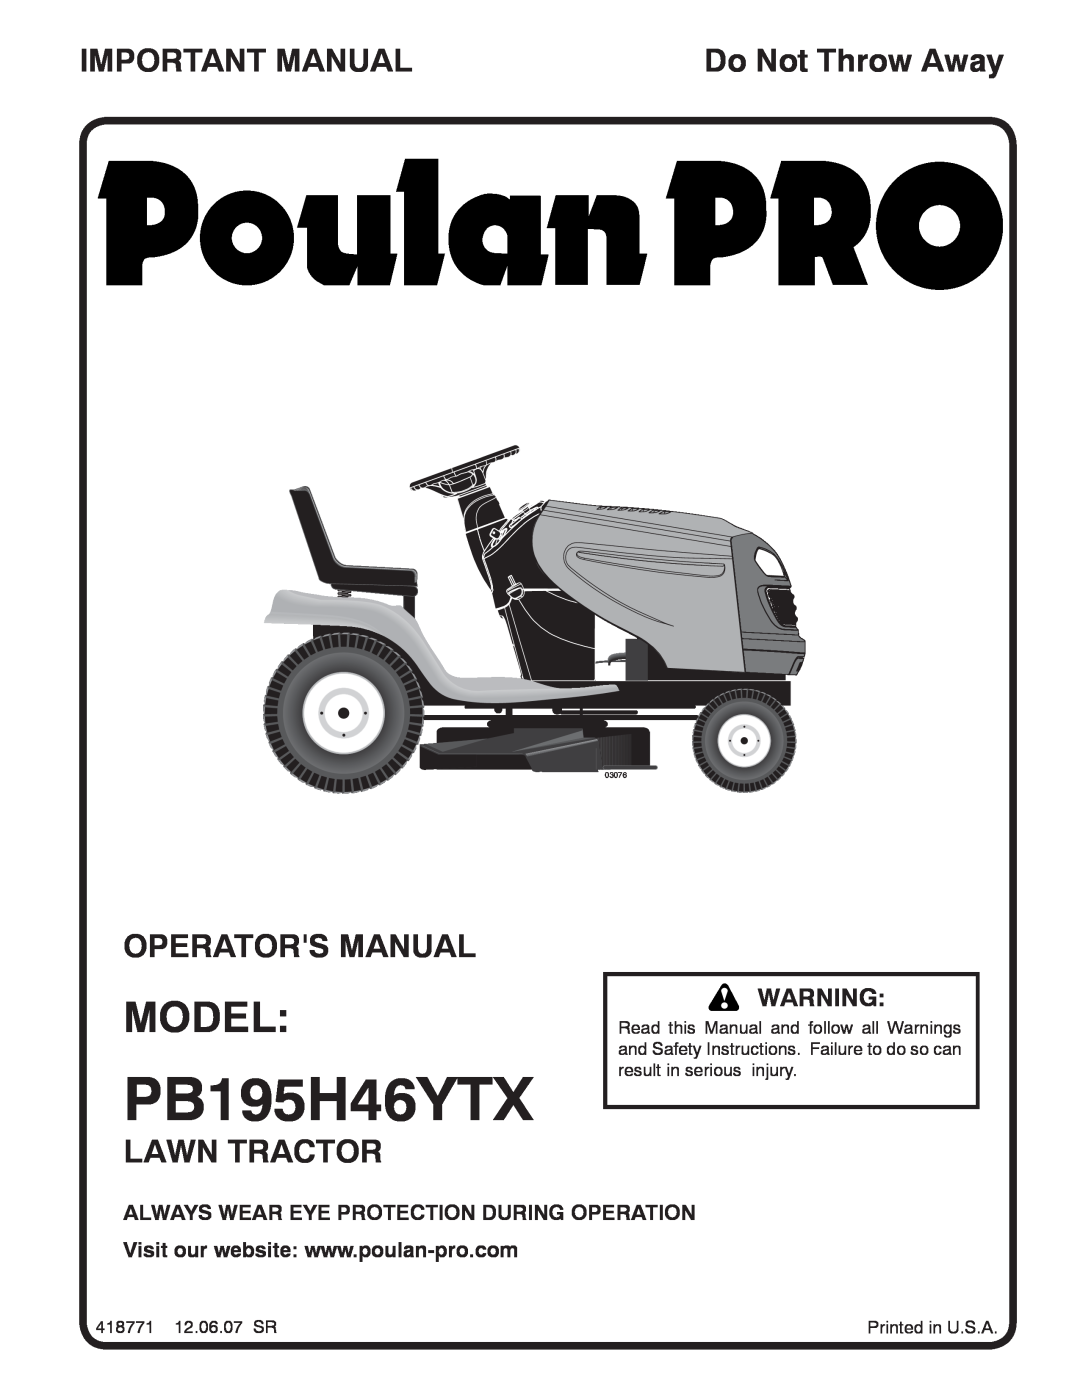 Poulan PB195H46YTX, 96042006800 manual Model, Important Manual, Operators Manual, Lawn Tractor, Do Not Throw Away, 03076 